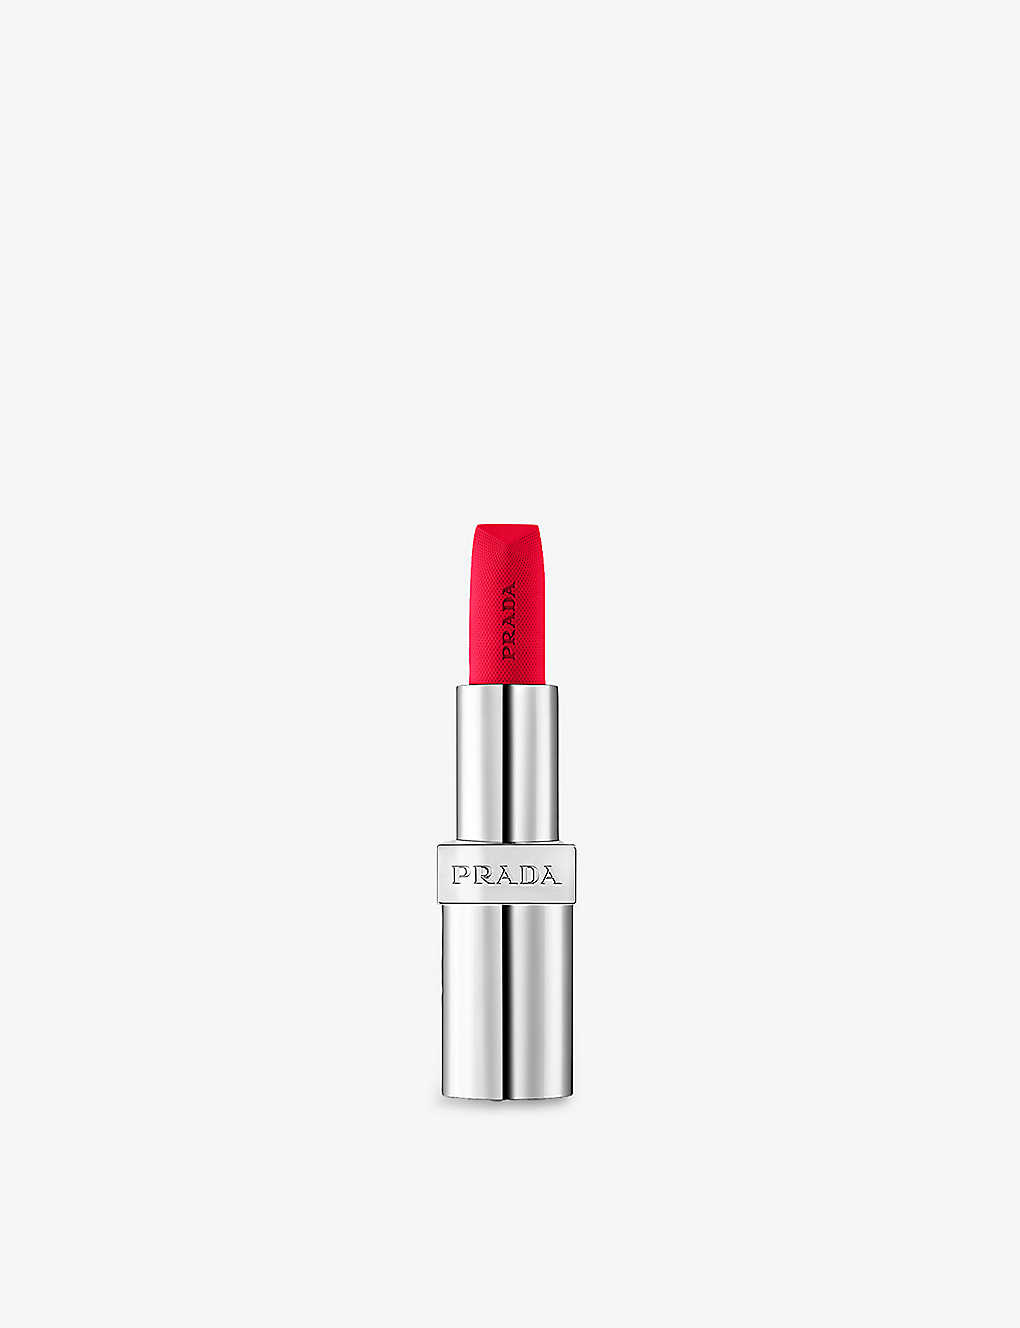 Prada Candy Soft Matte Monochrome Refillable Lipstick 3.8g